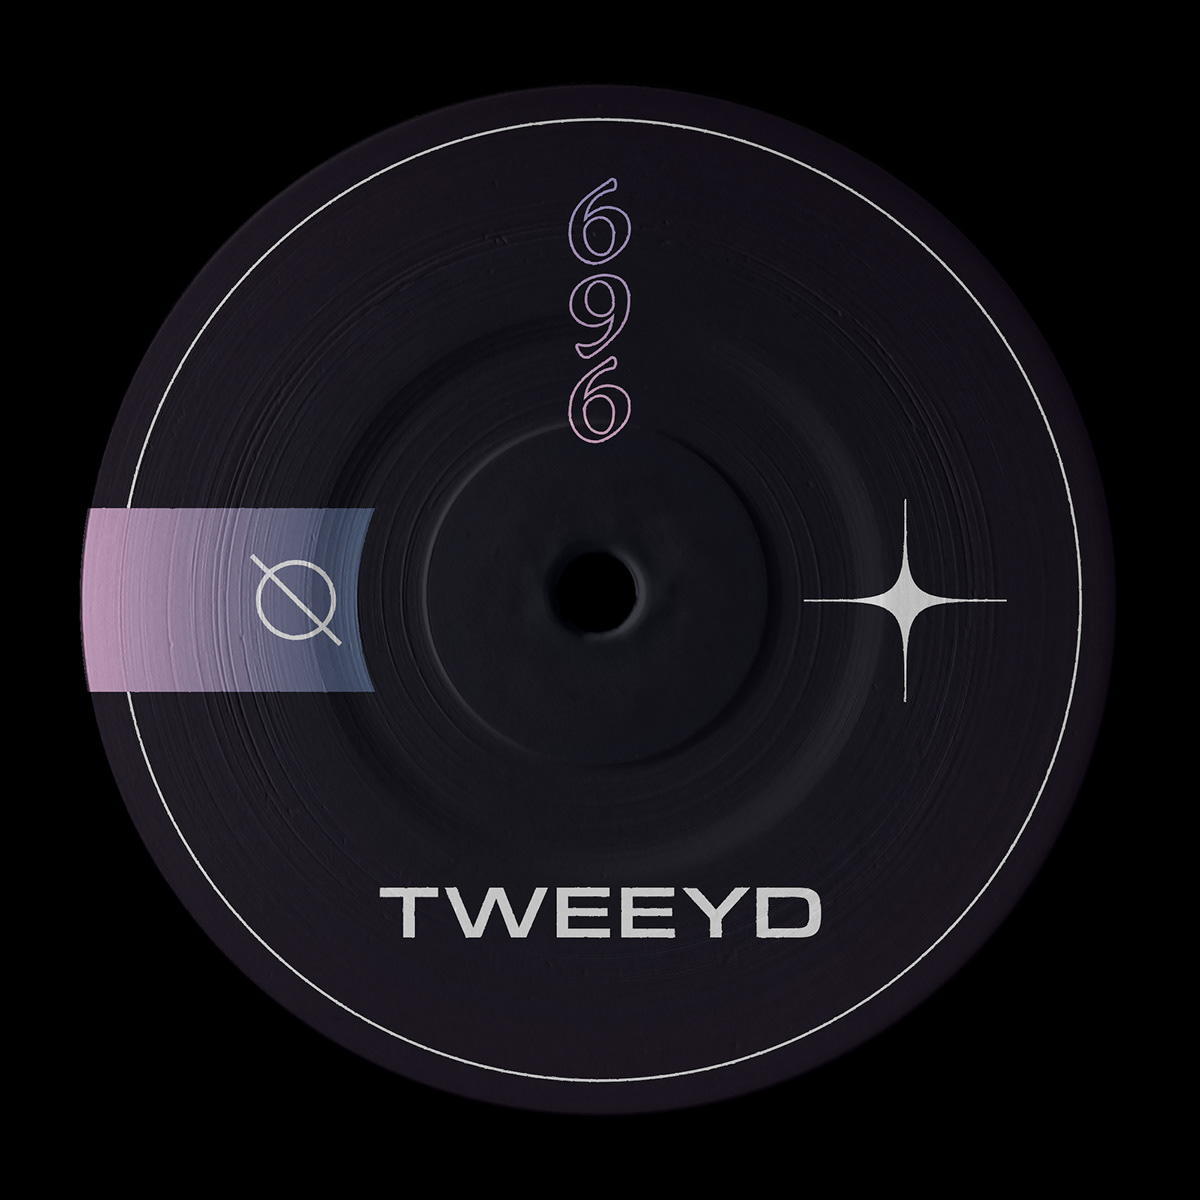 vinyl Label design tweeyd black symbol purple blue acid techno